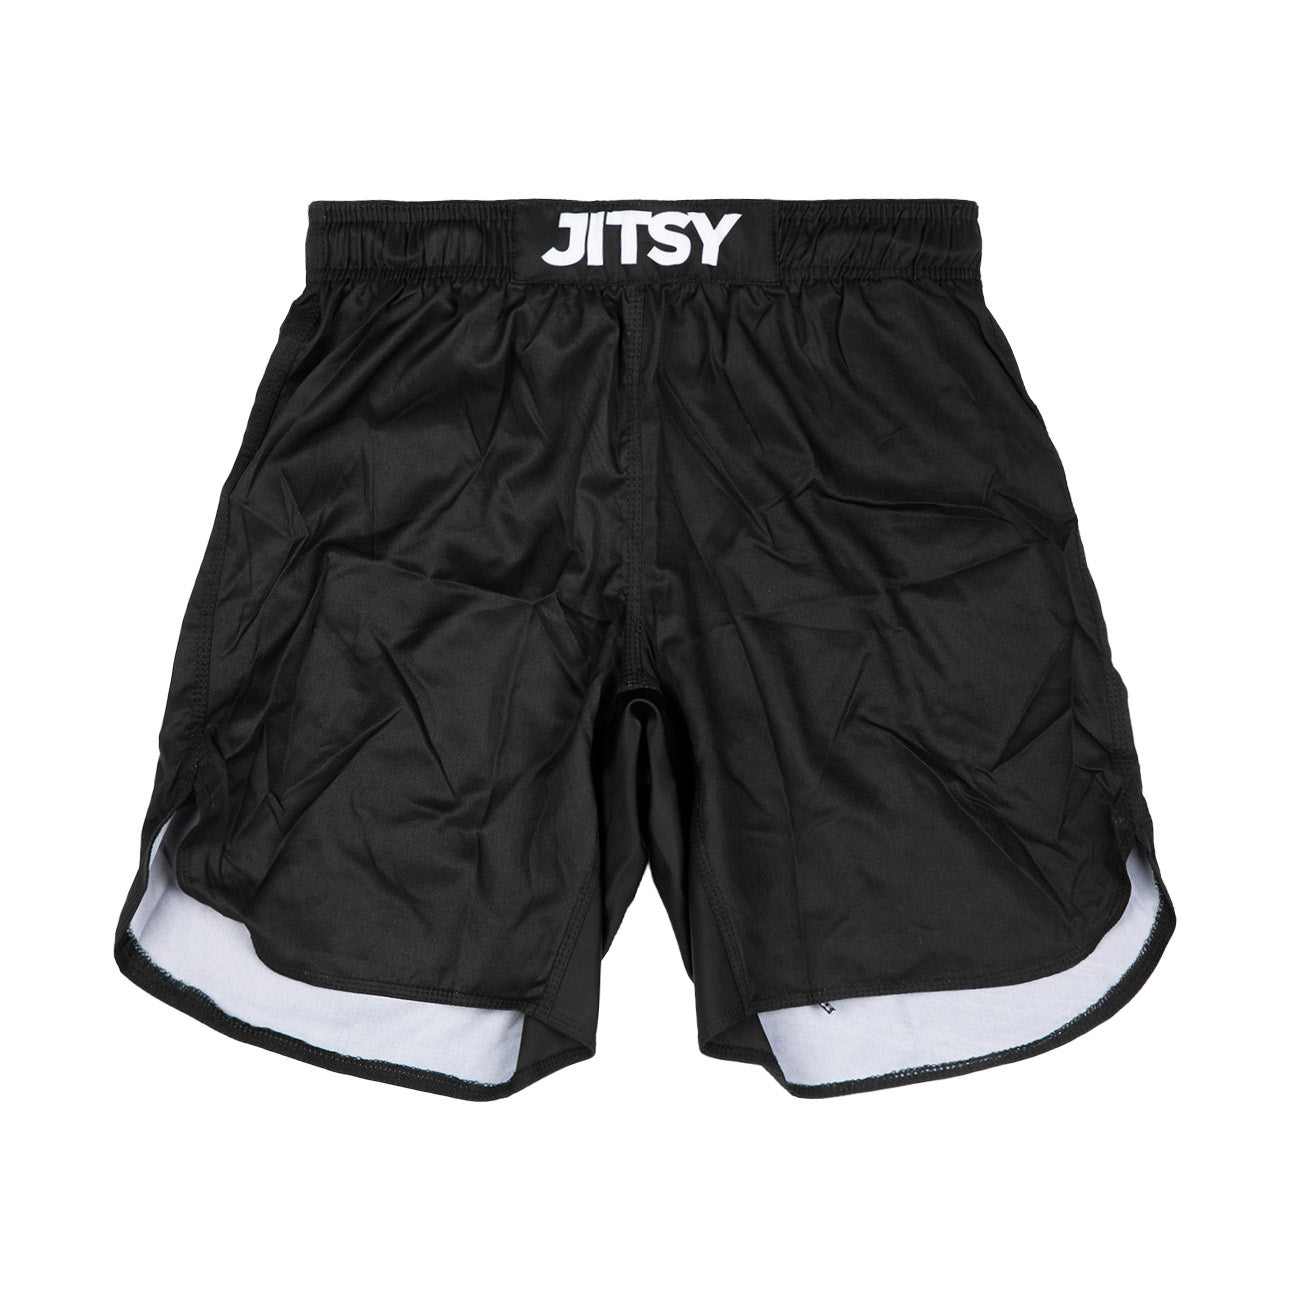 Jitsy Black Grappling Shorts - Men